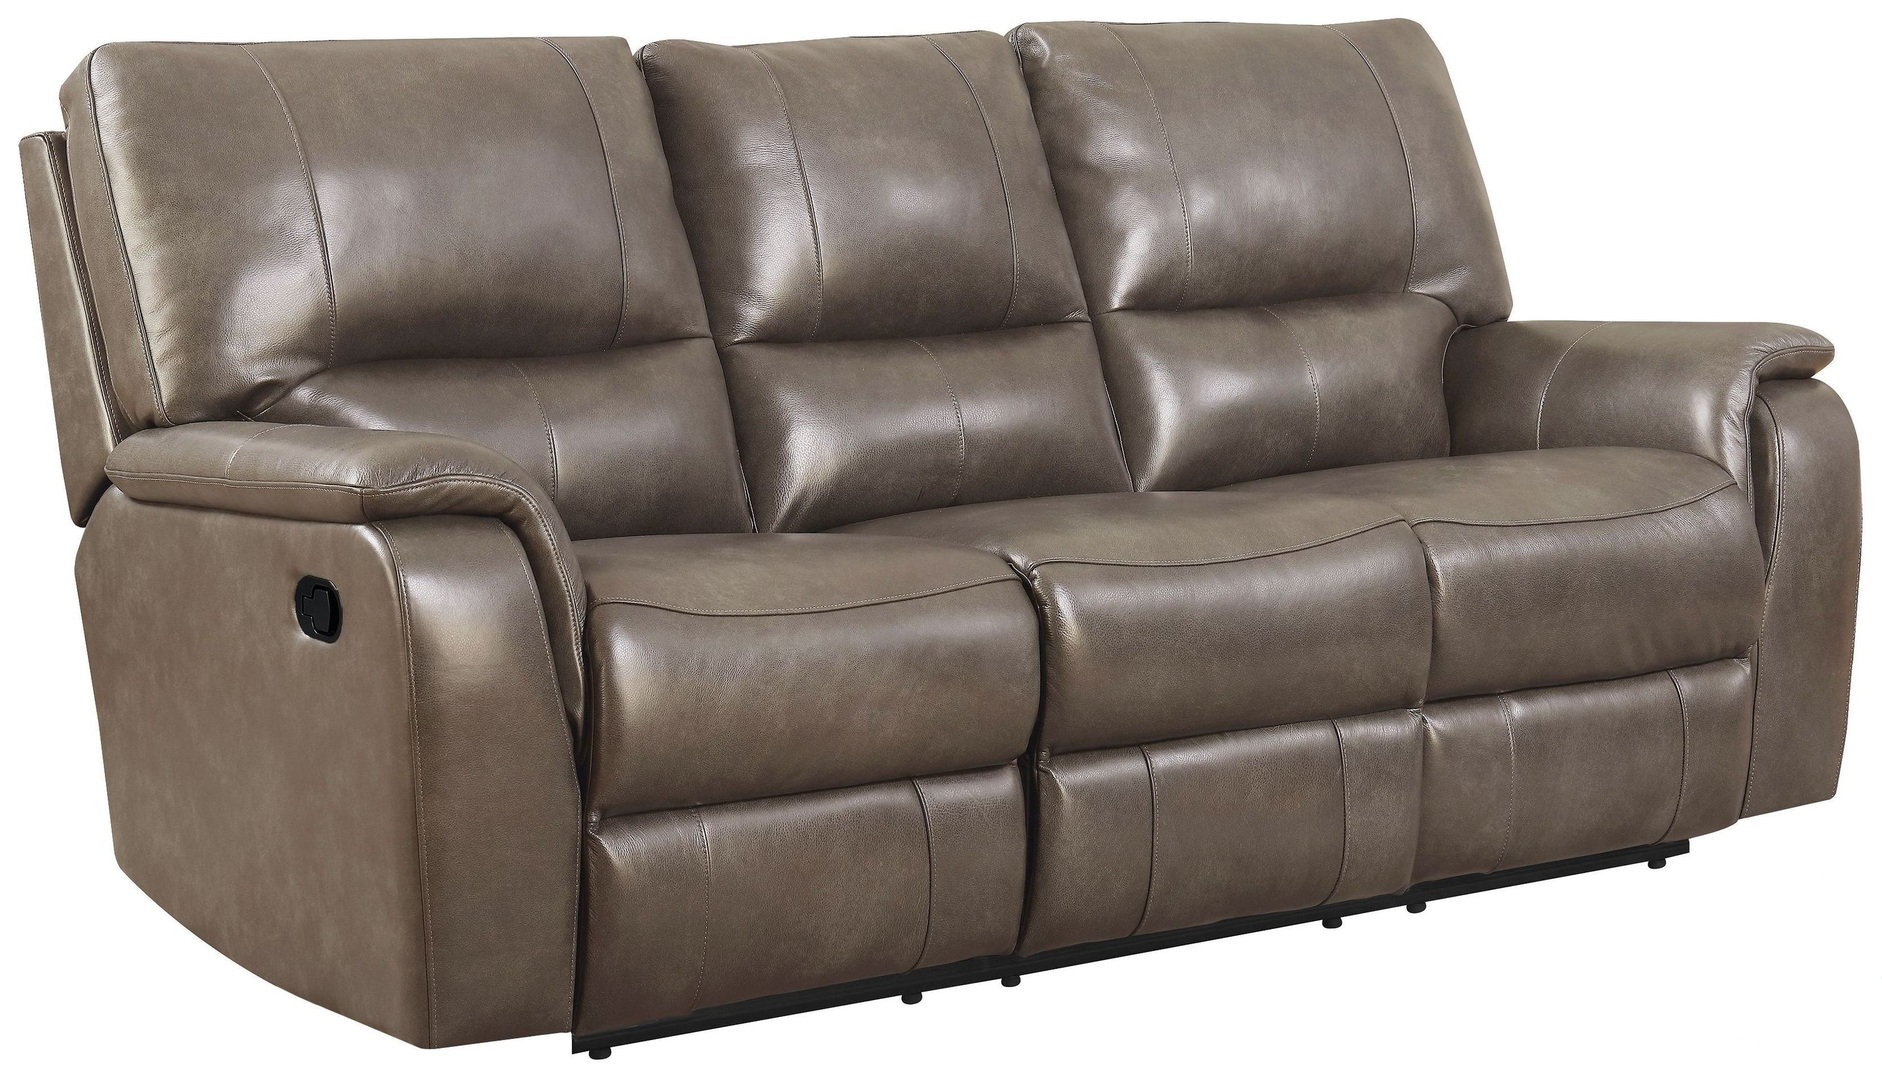 boylan leather recliner sofa